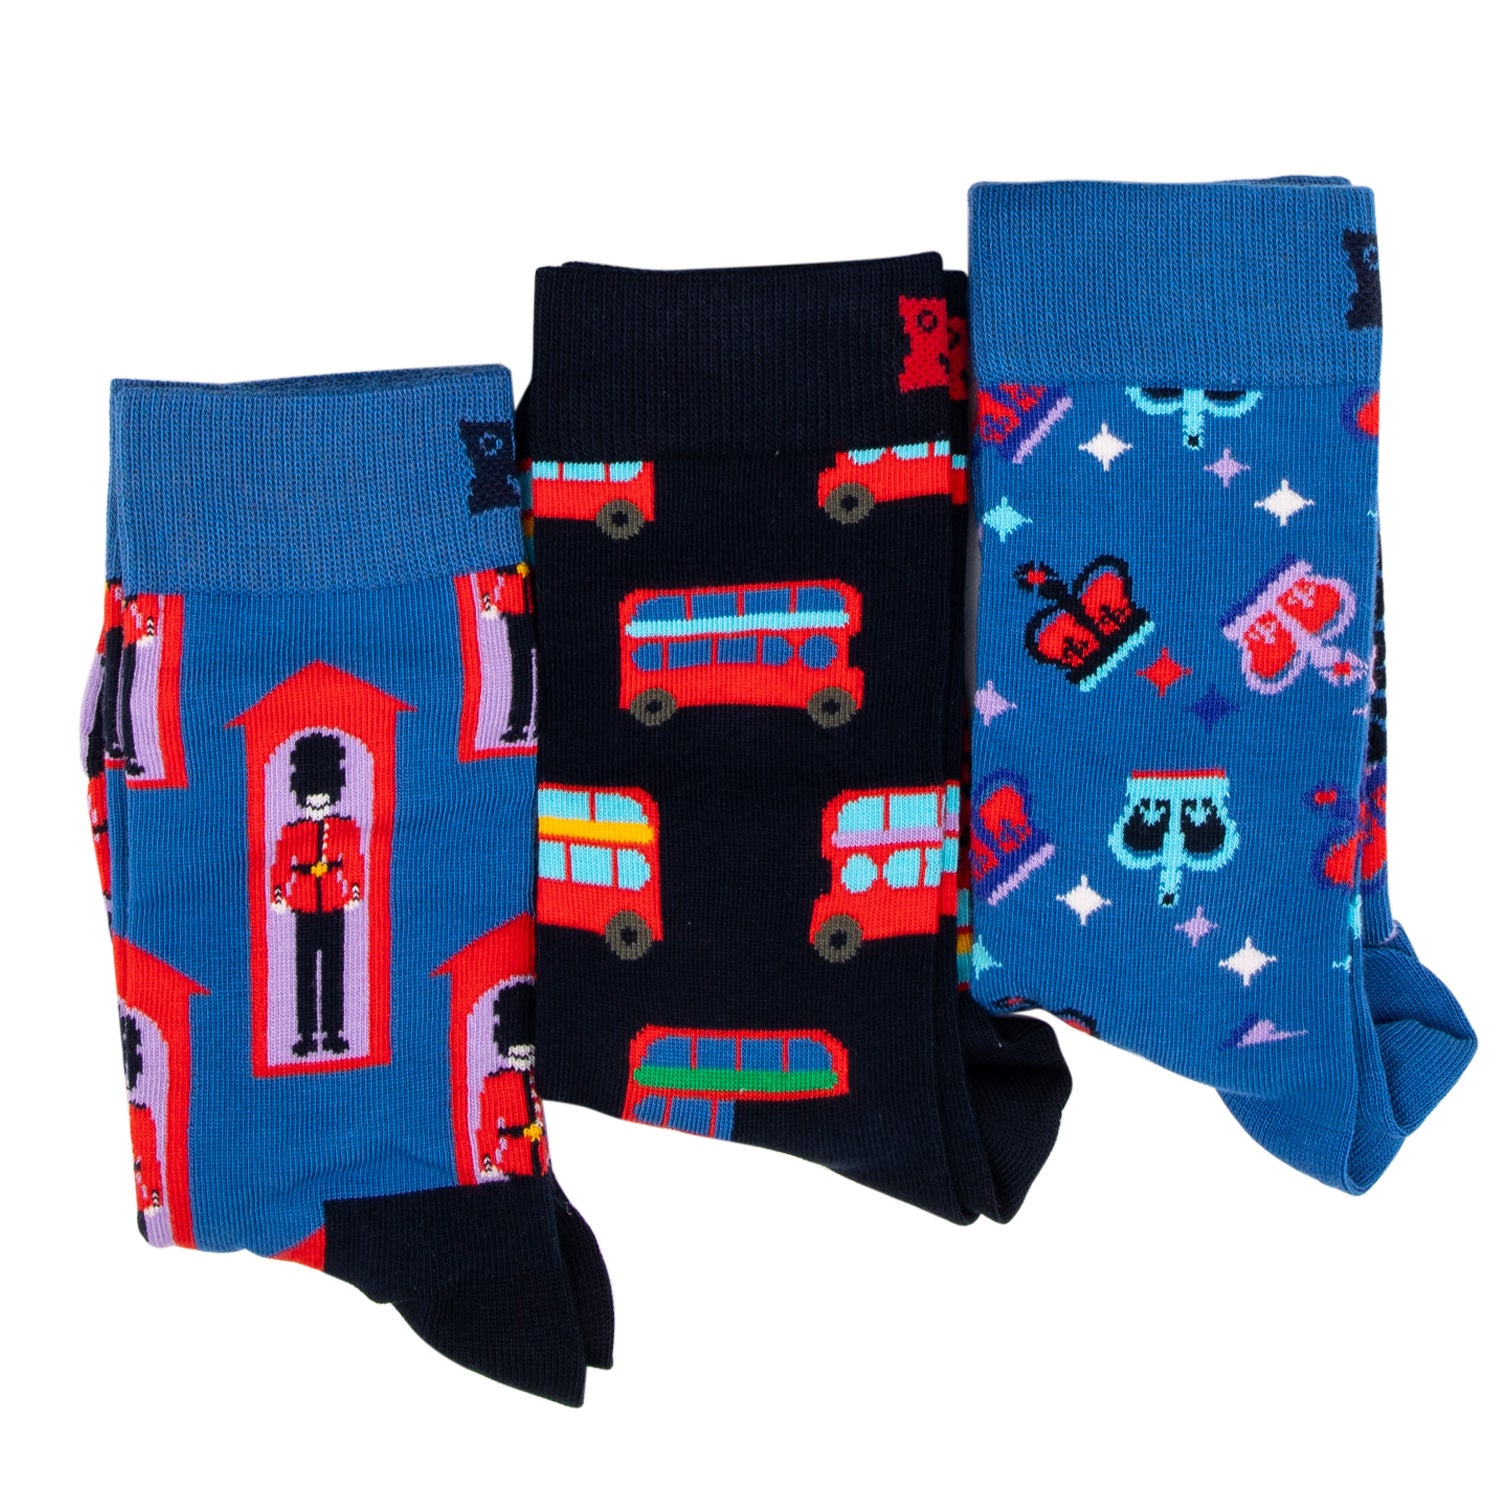 Happy Socks London Union Jack Gift Box 2